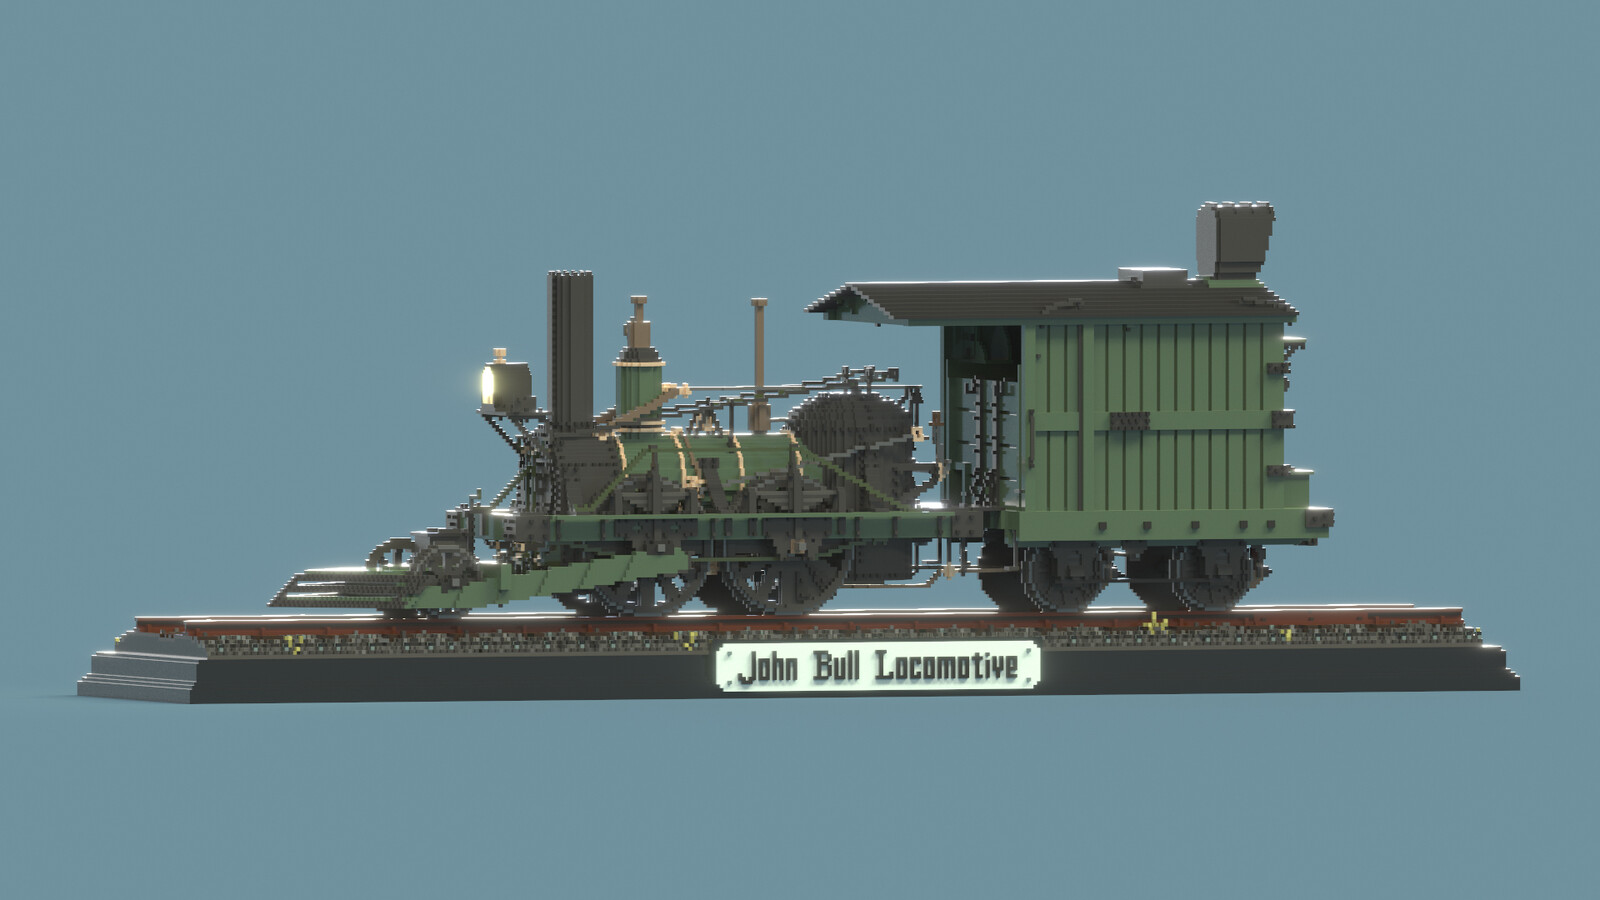 Side profile of the John Bull steam locomotive.